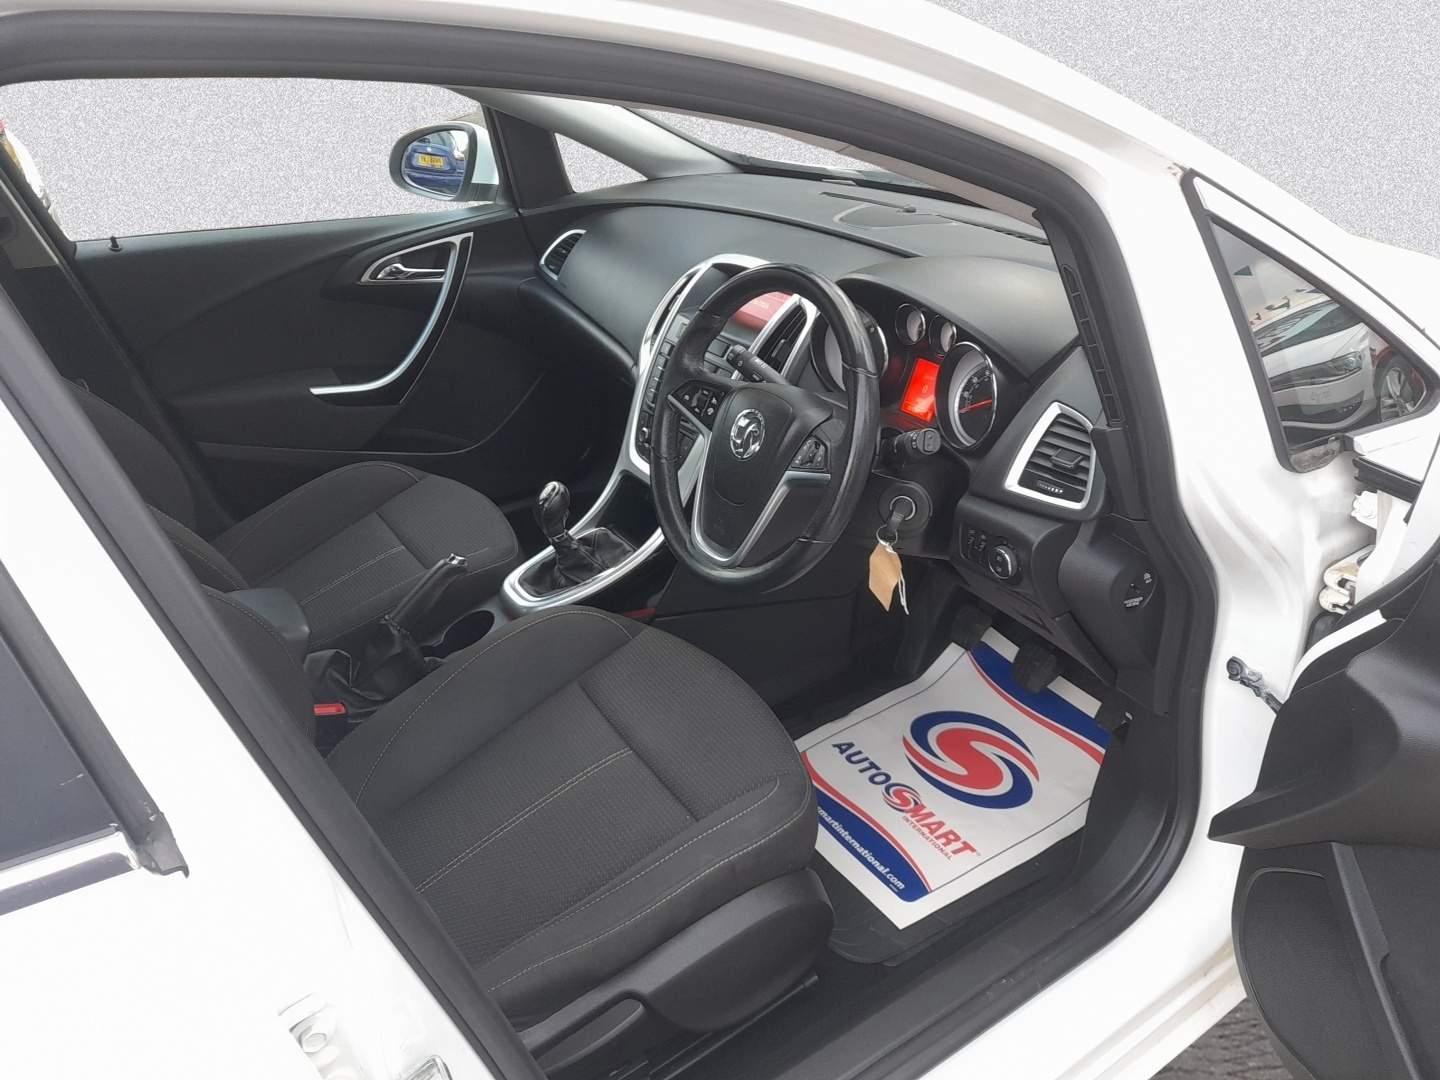 Vauxhall Astra 1.6 16v SRi Euro 5 5dr